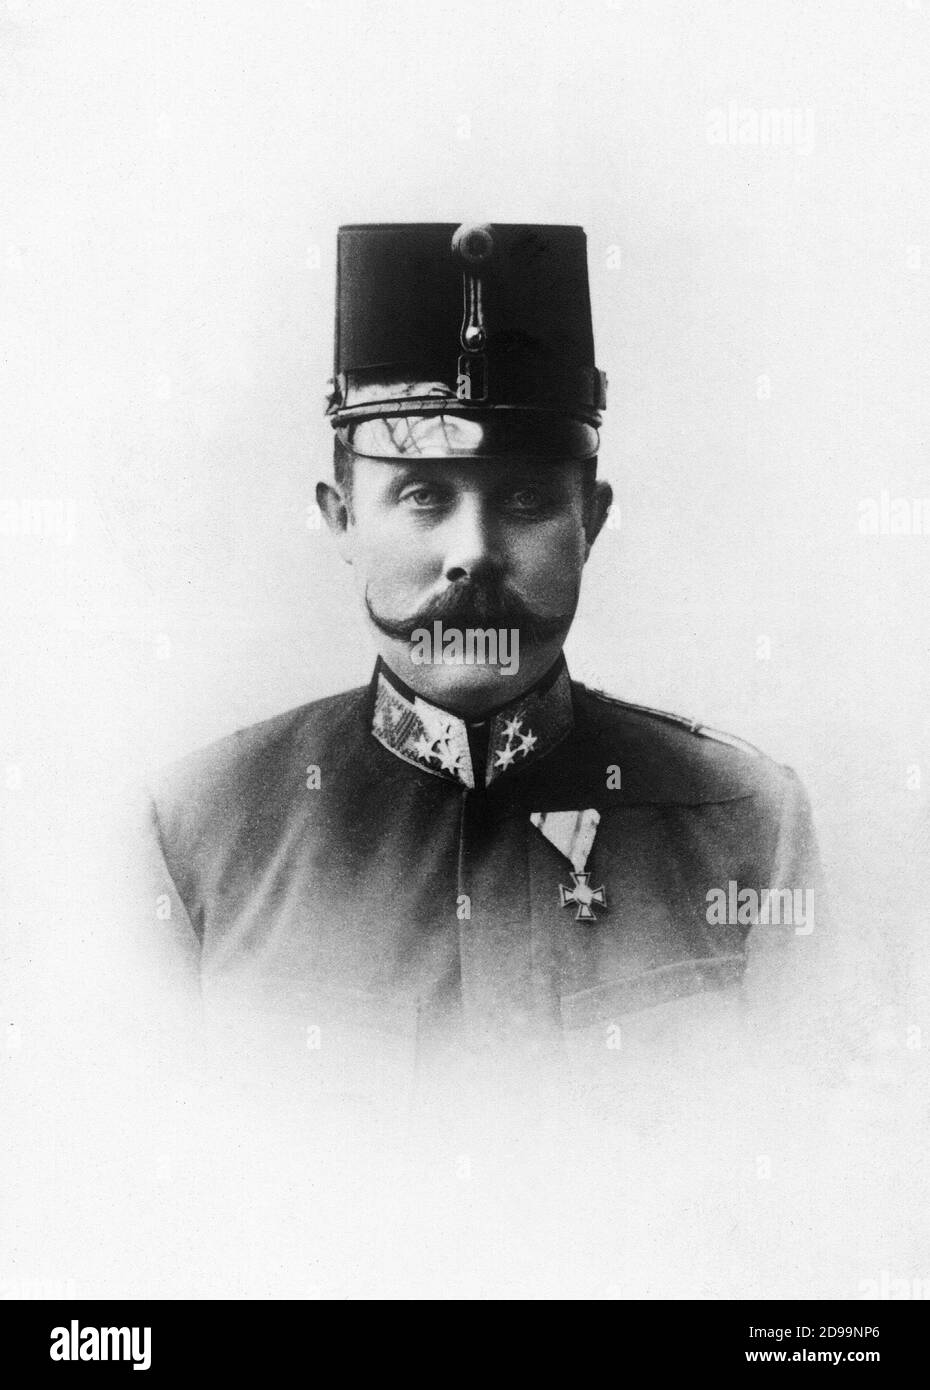 The Erzherzog ( Crown Prince ) Archduke  Franz Ferdinand d' Este ASBURG ( ABSBURG ) Von Osterreich ( Graz 1863 - Sarajevo 28 june 1914 ) - Killed in SARAJEVO with his wife Sophia Duchess of Hohenberg . - WWI - PRIMA GUERRA MONDIALE - WORLD WAR I - Impero astroungarico - ASBURGO - ABSBURGO - Nobiltà - Nobili - Nobility - Royalty - Francesco Ferdinando Duca d' Austria - military uniform - divisa militare - baffi - moustache - medaglia - medaglie - medal - medals - hat - cappello ---- Archivio GBB Stock Photo